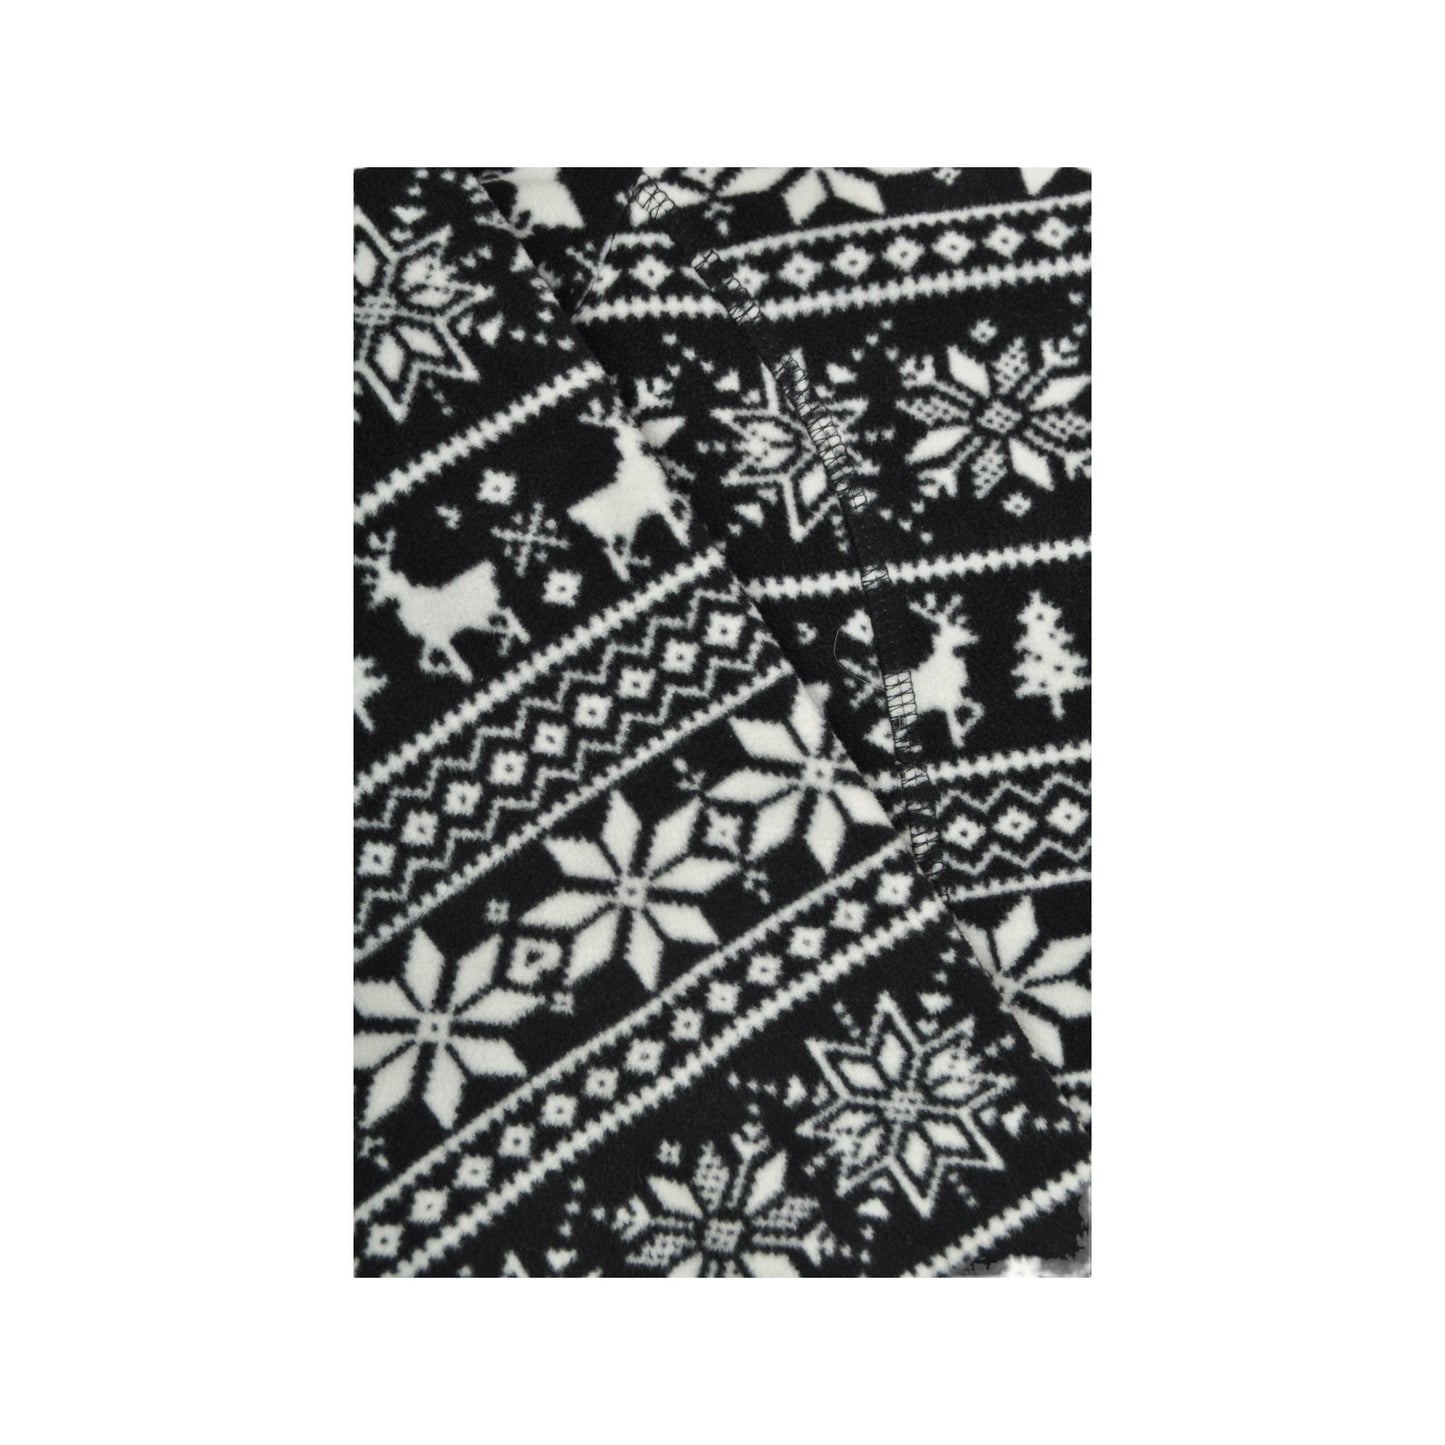 Vintage Fleece 1/4 Zip Retro Pattern Black/White Ladies XXL